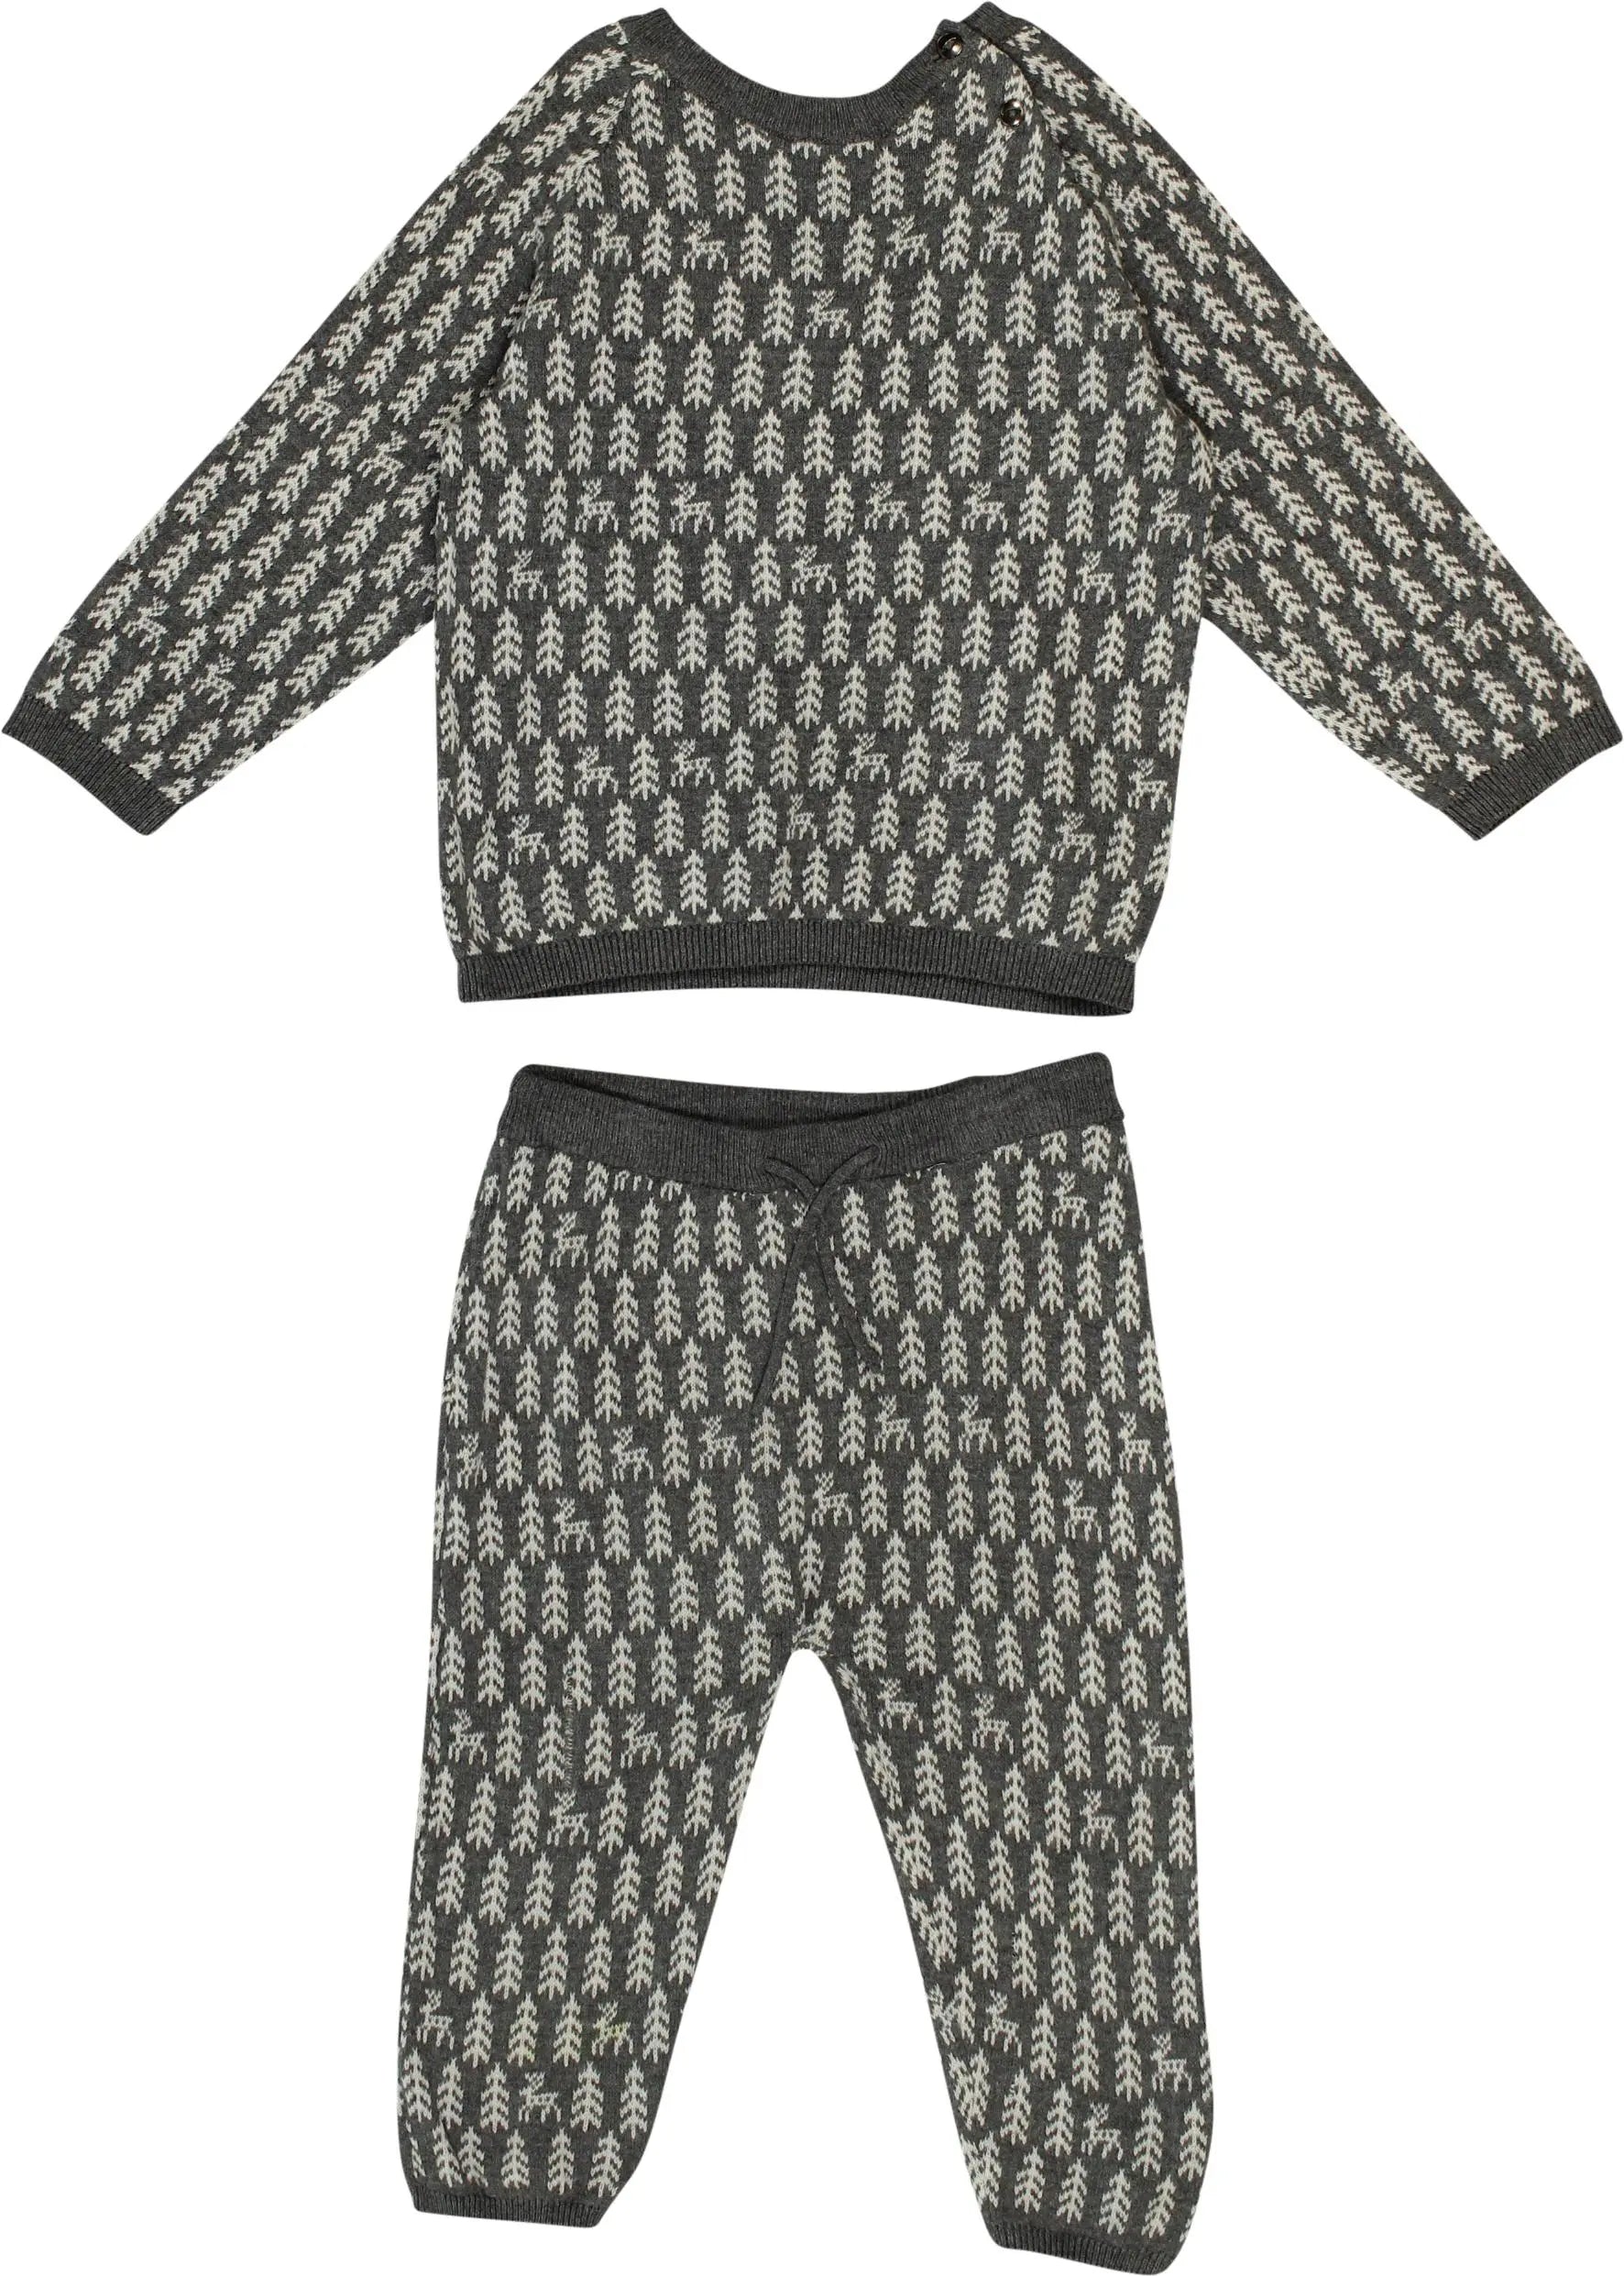 H&M - Pyjama Set- ThriftTale.com - Vintage and second handclothing